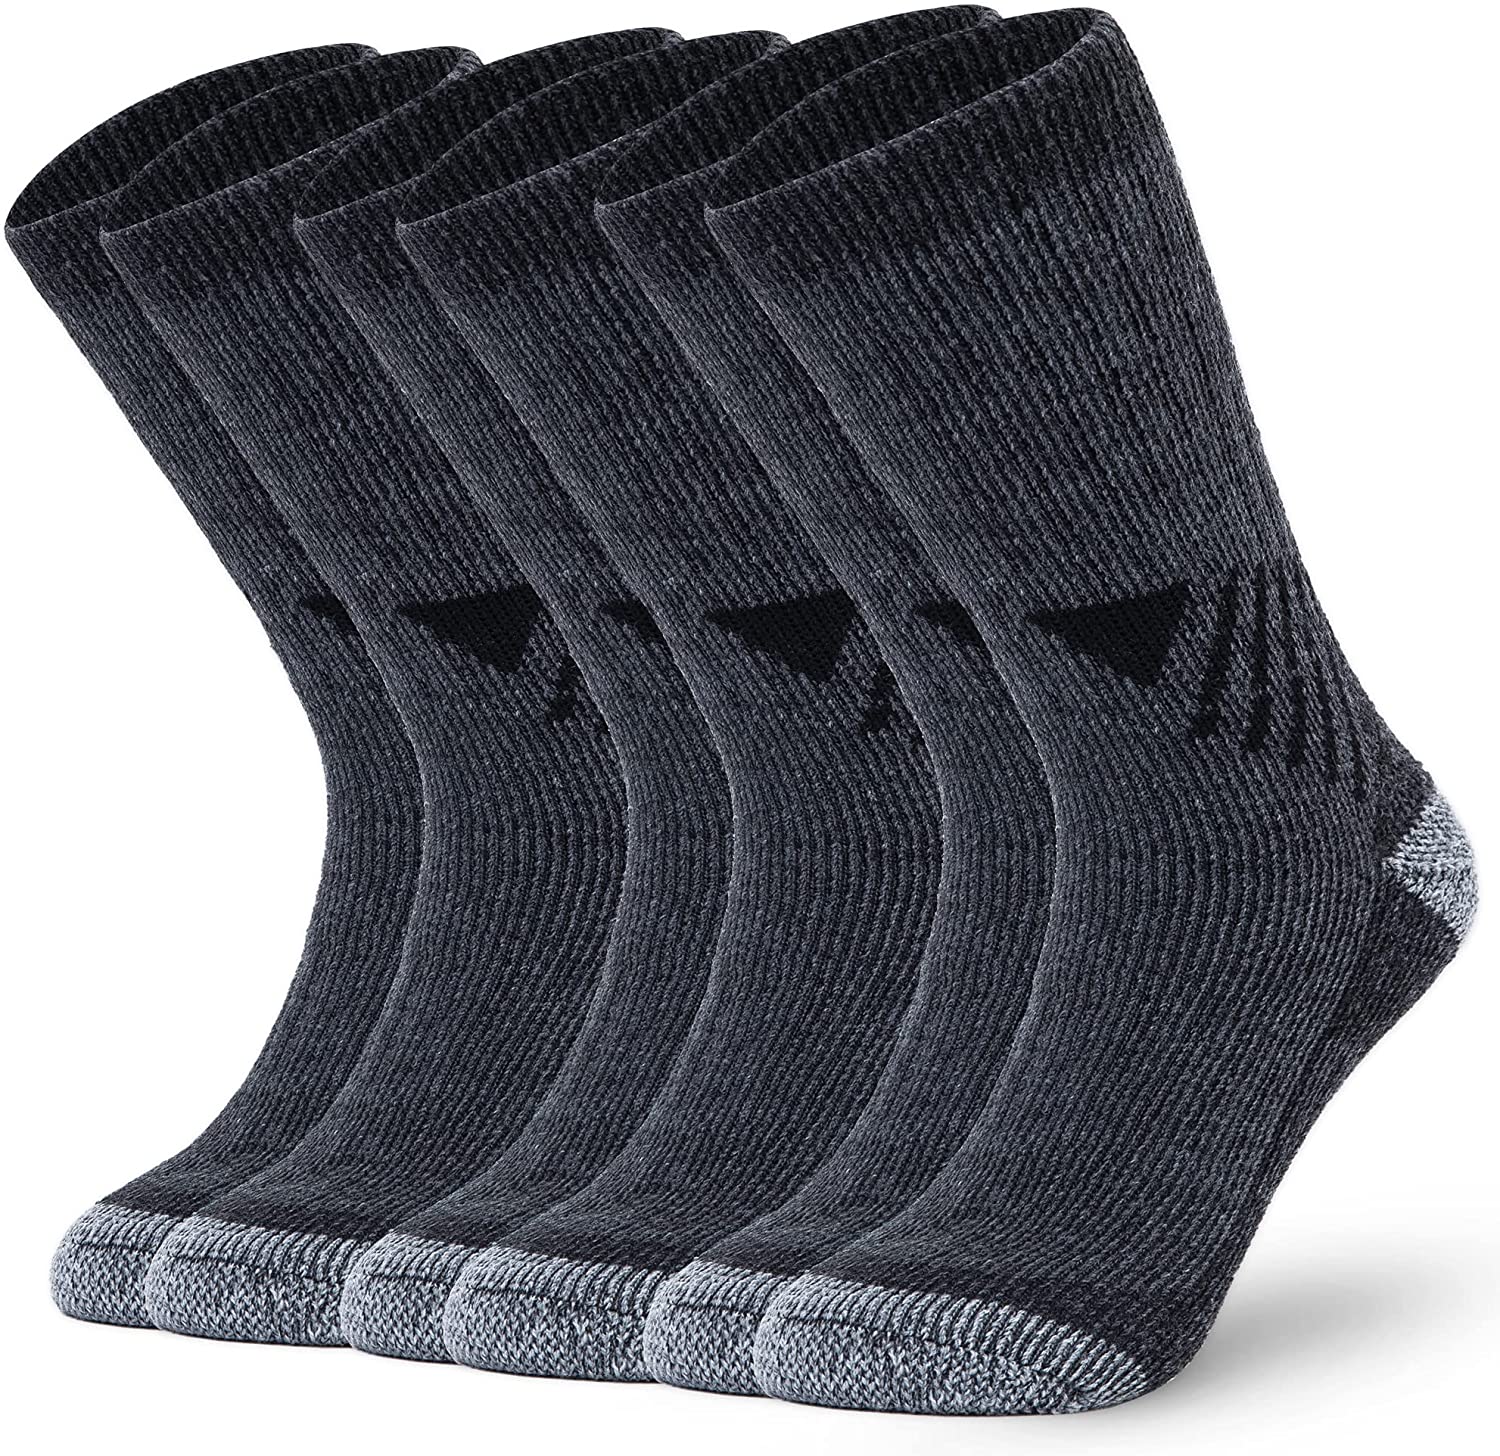 Alvada Merino Wool Hiking Socks Thermal Warm Crew Winter Boot Sock